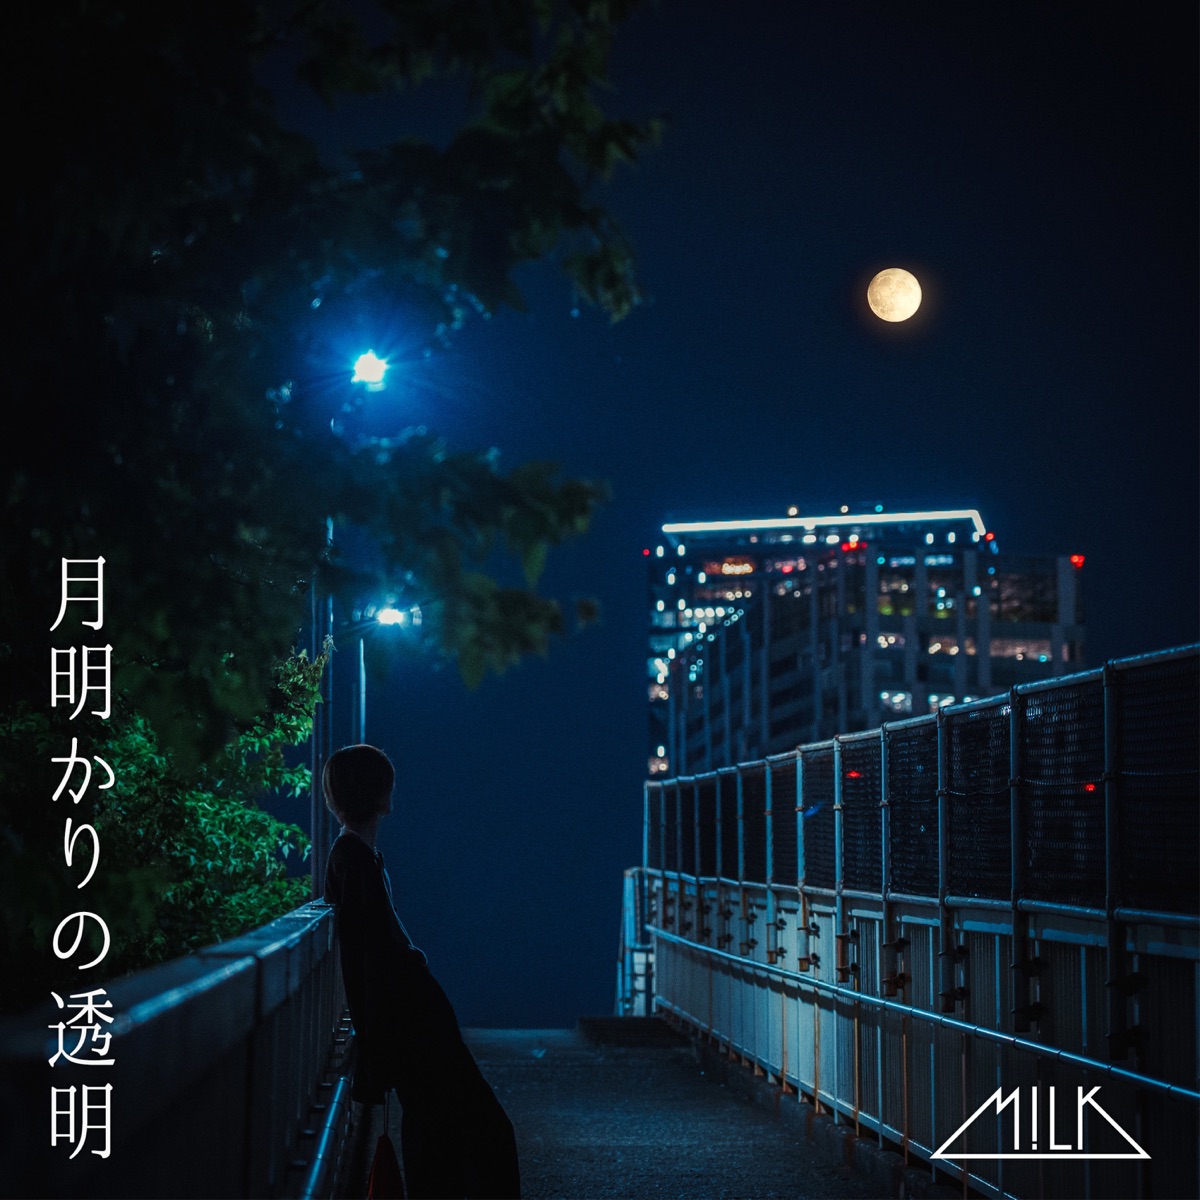 Cover art for『M!LK - 月明かりの透明』from the release『Moonlight Transparency